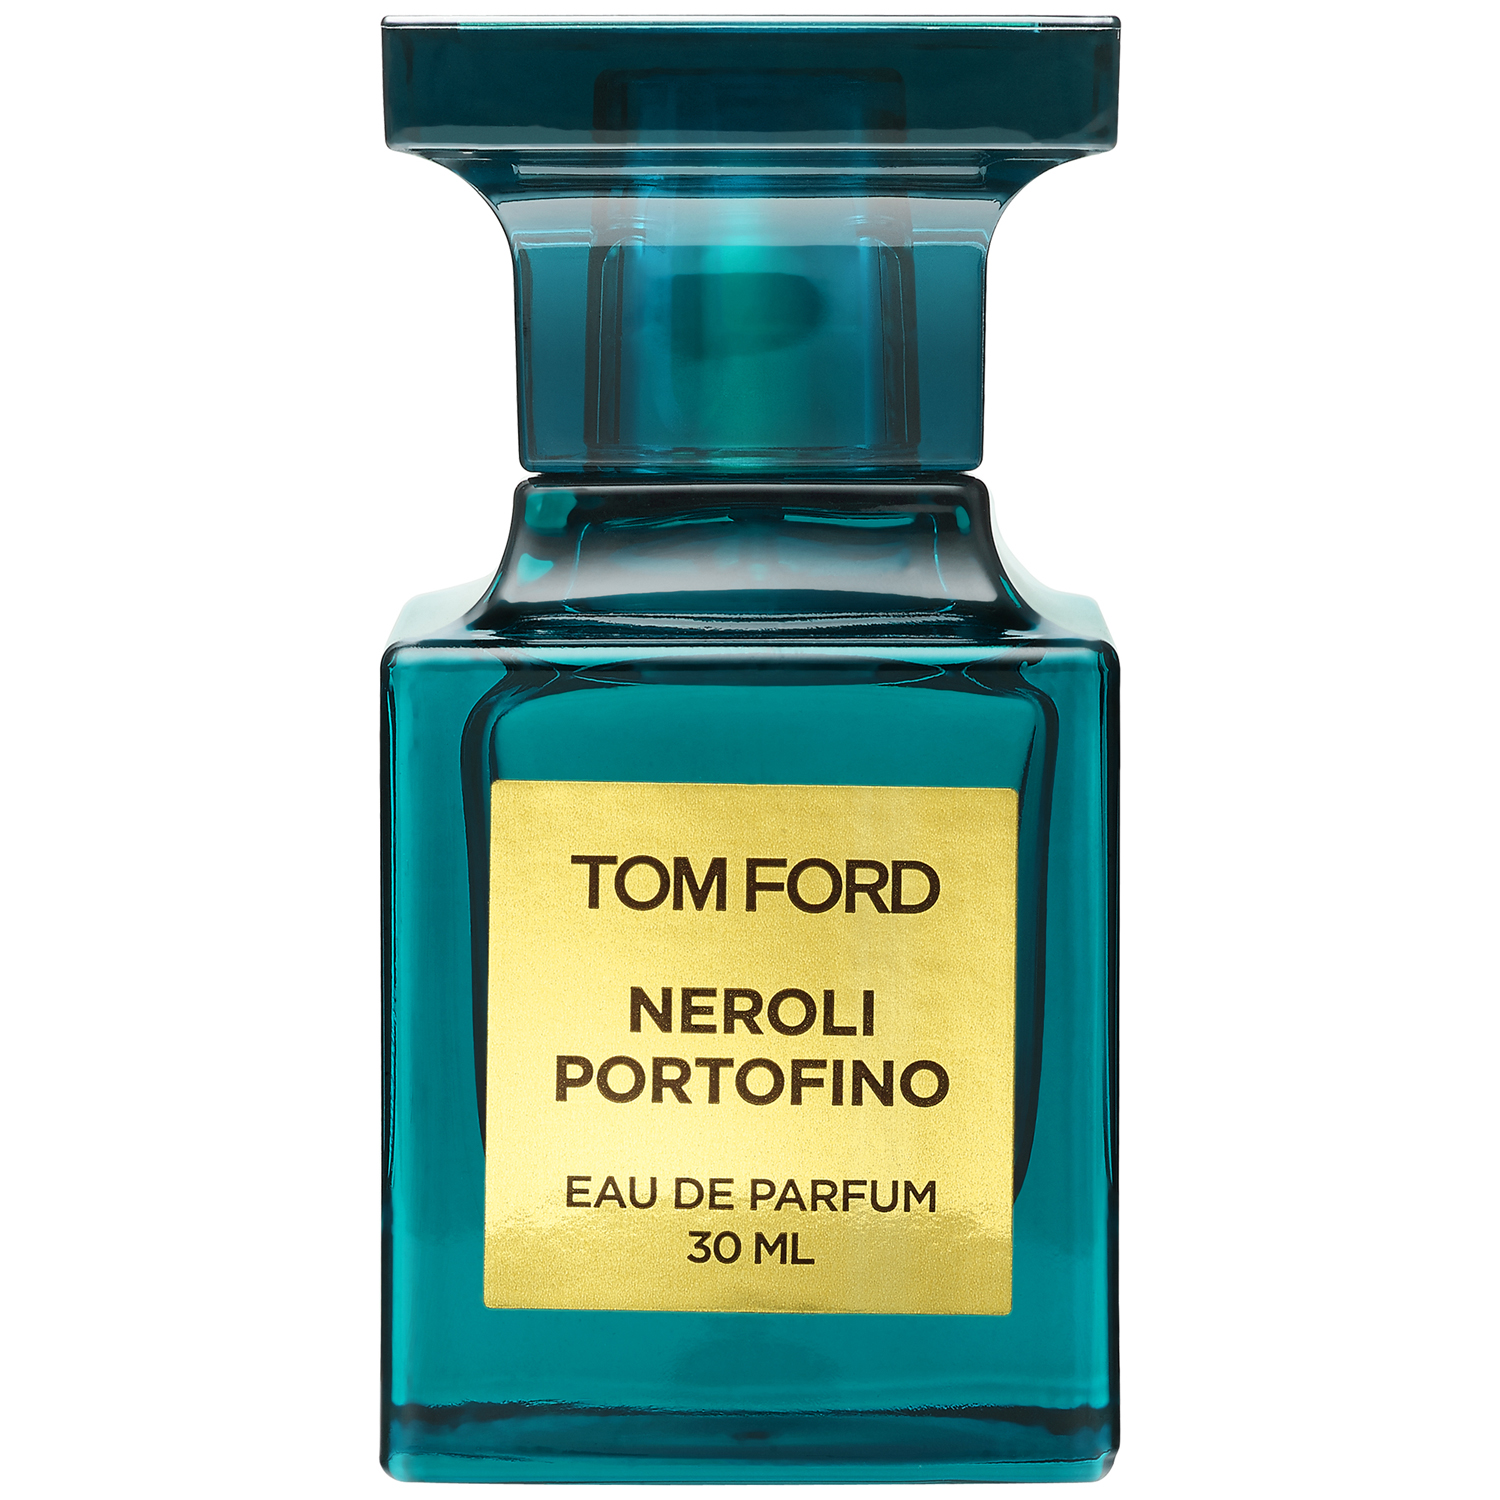 Tom Ford Neroli Portofino Fragrance and Giveaway